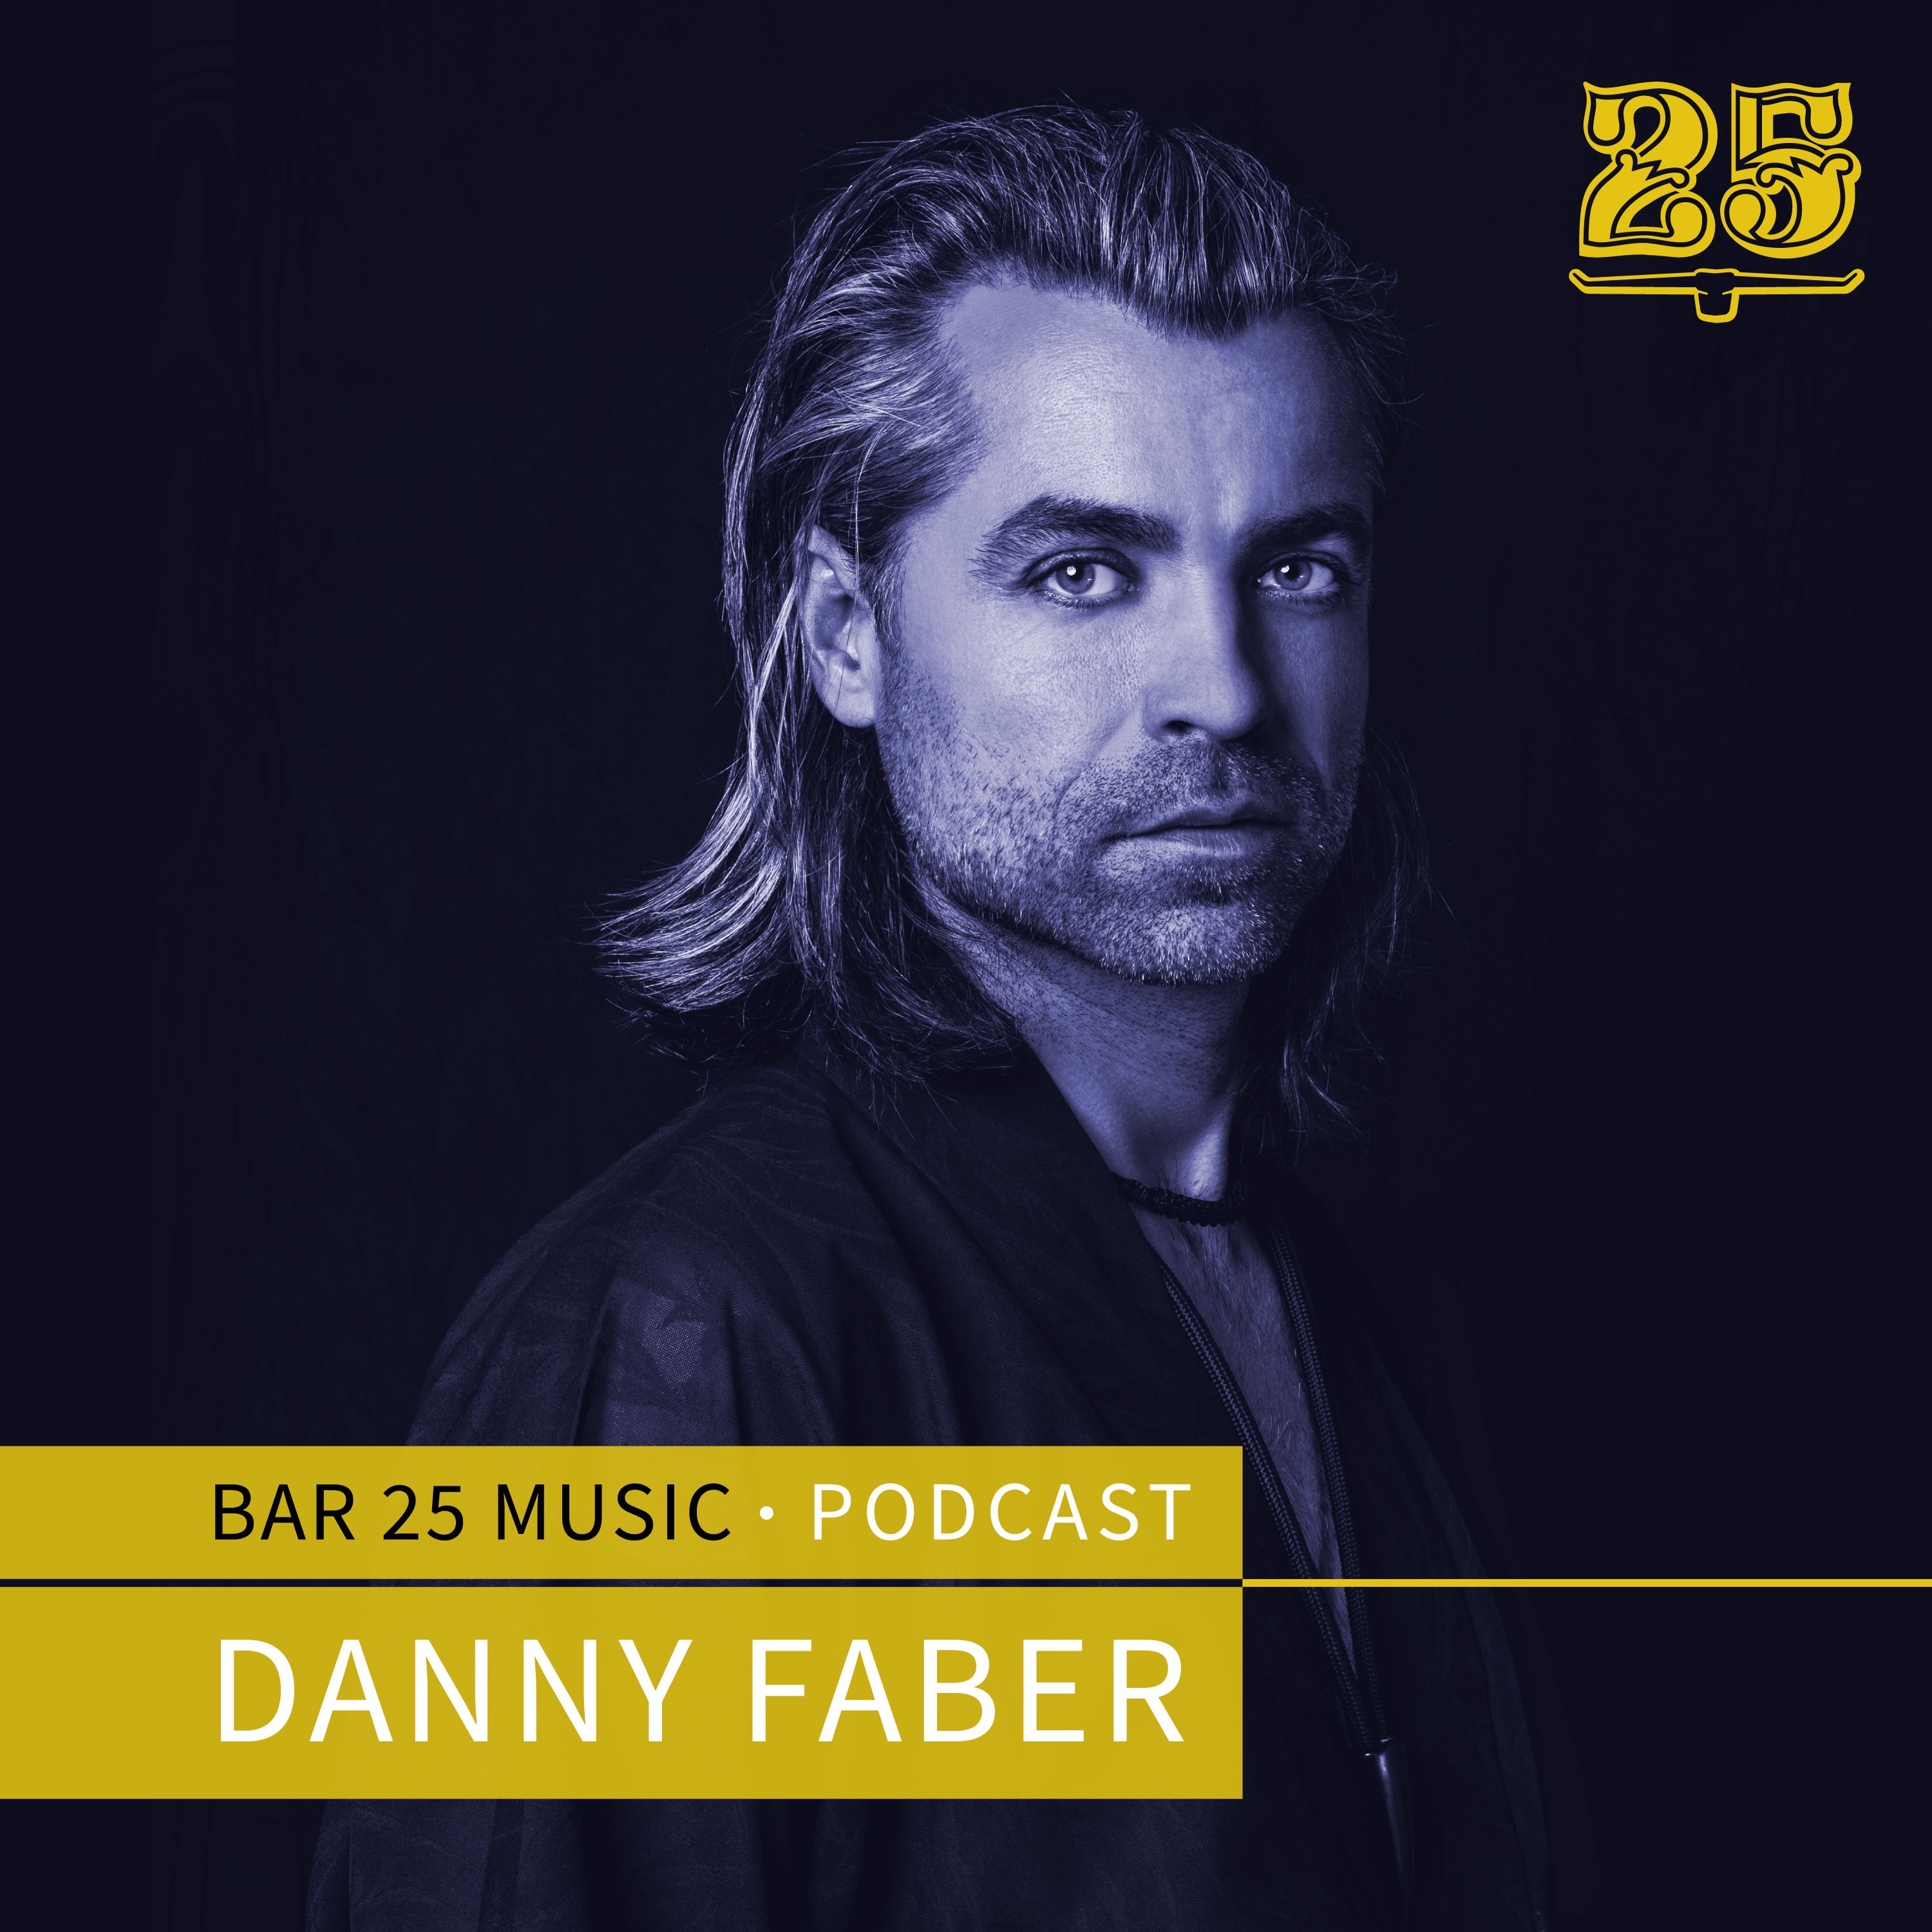 Soo dejiso Bar 25 Music Podcast #117 - Danny Faber